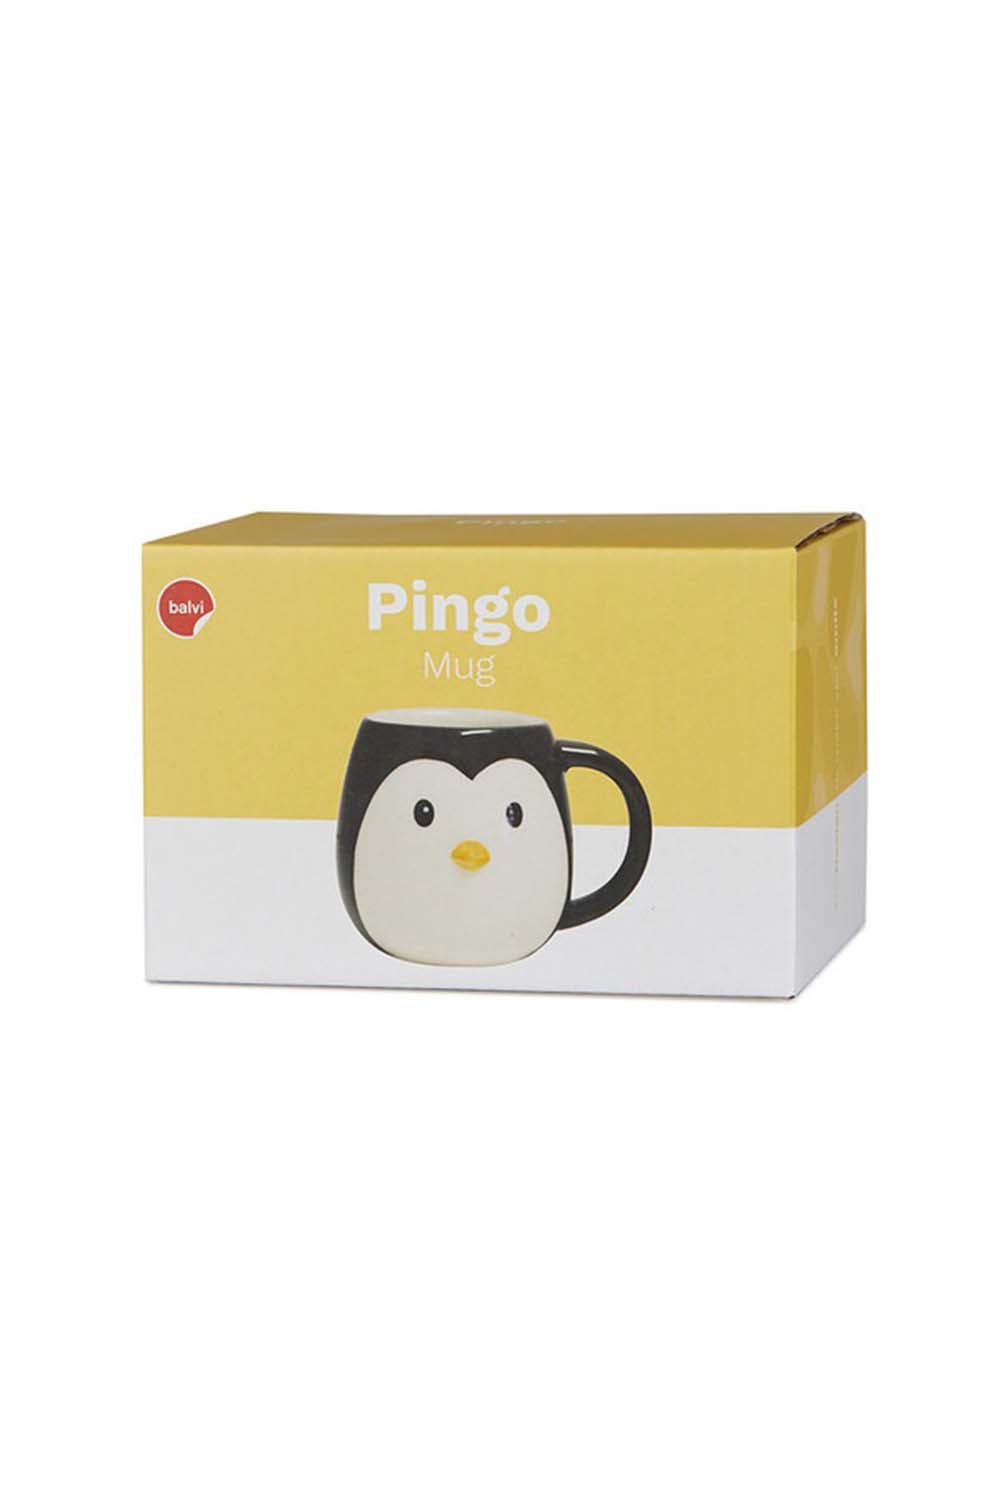 Mug,Pingo,400 Ml,Ceramic